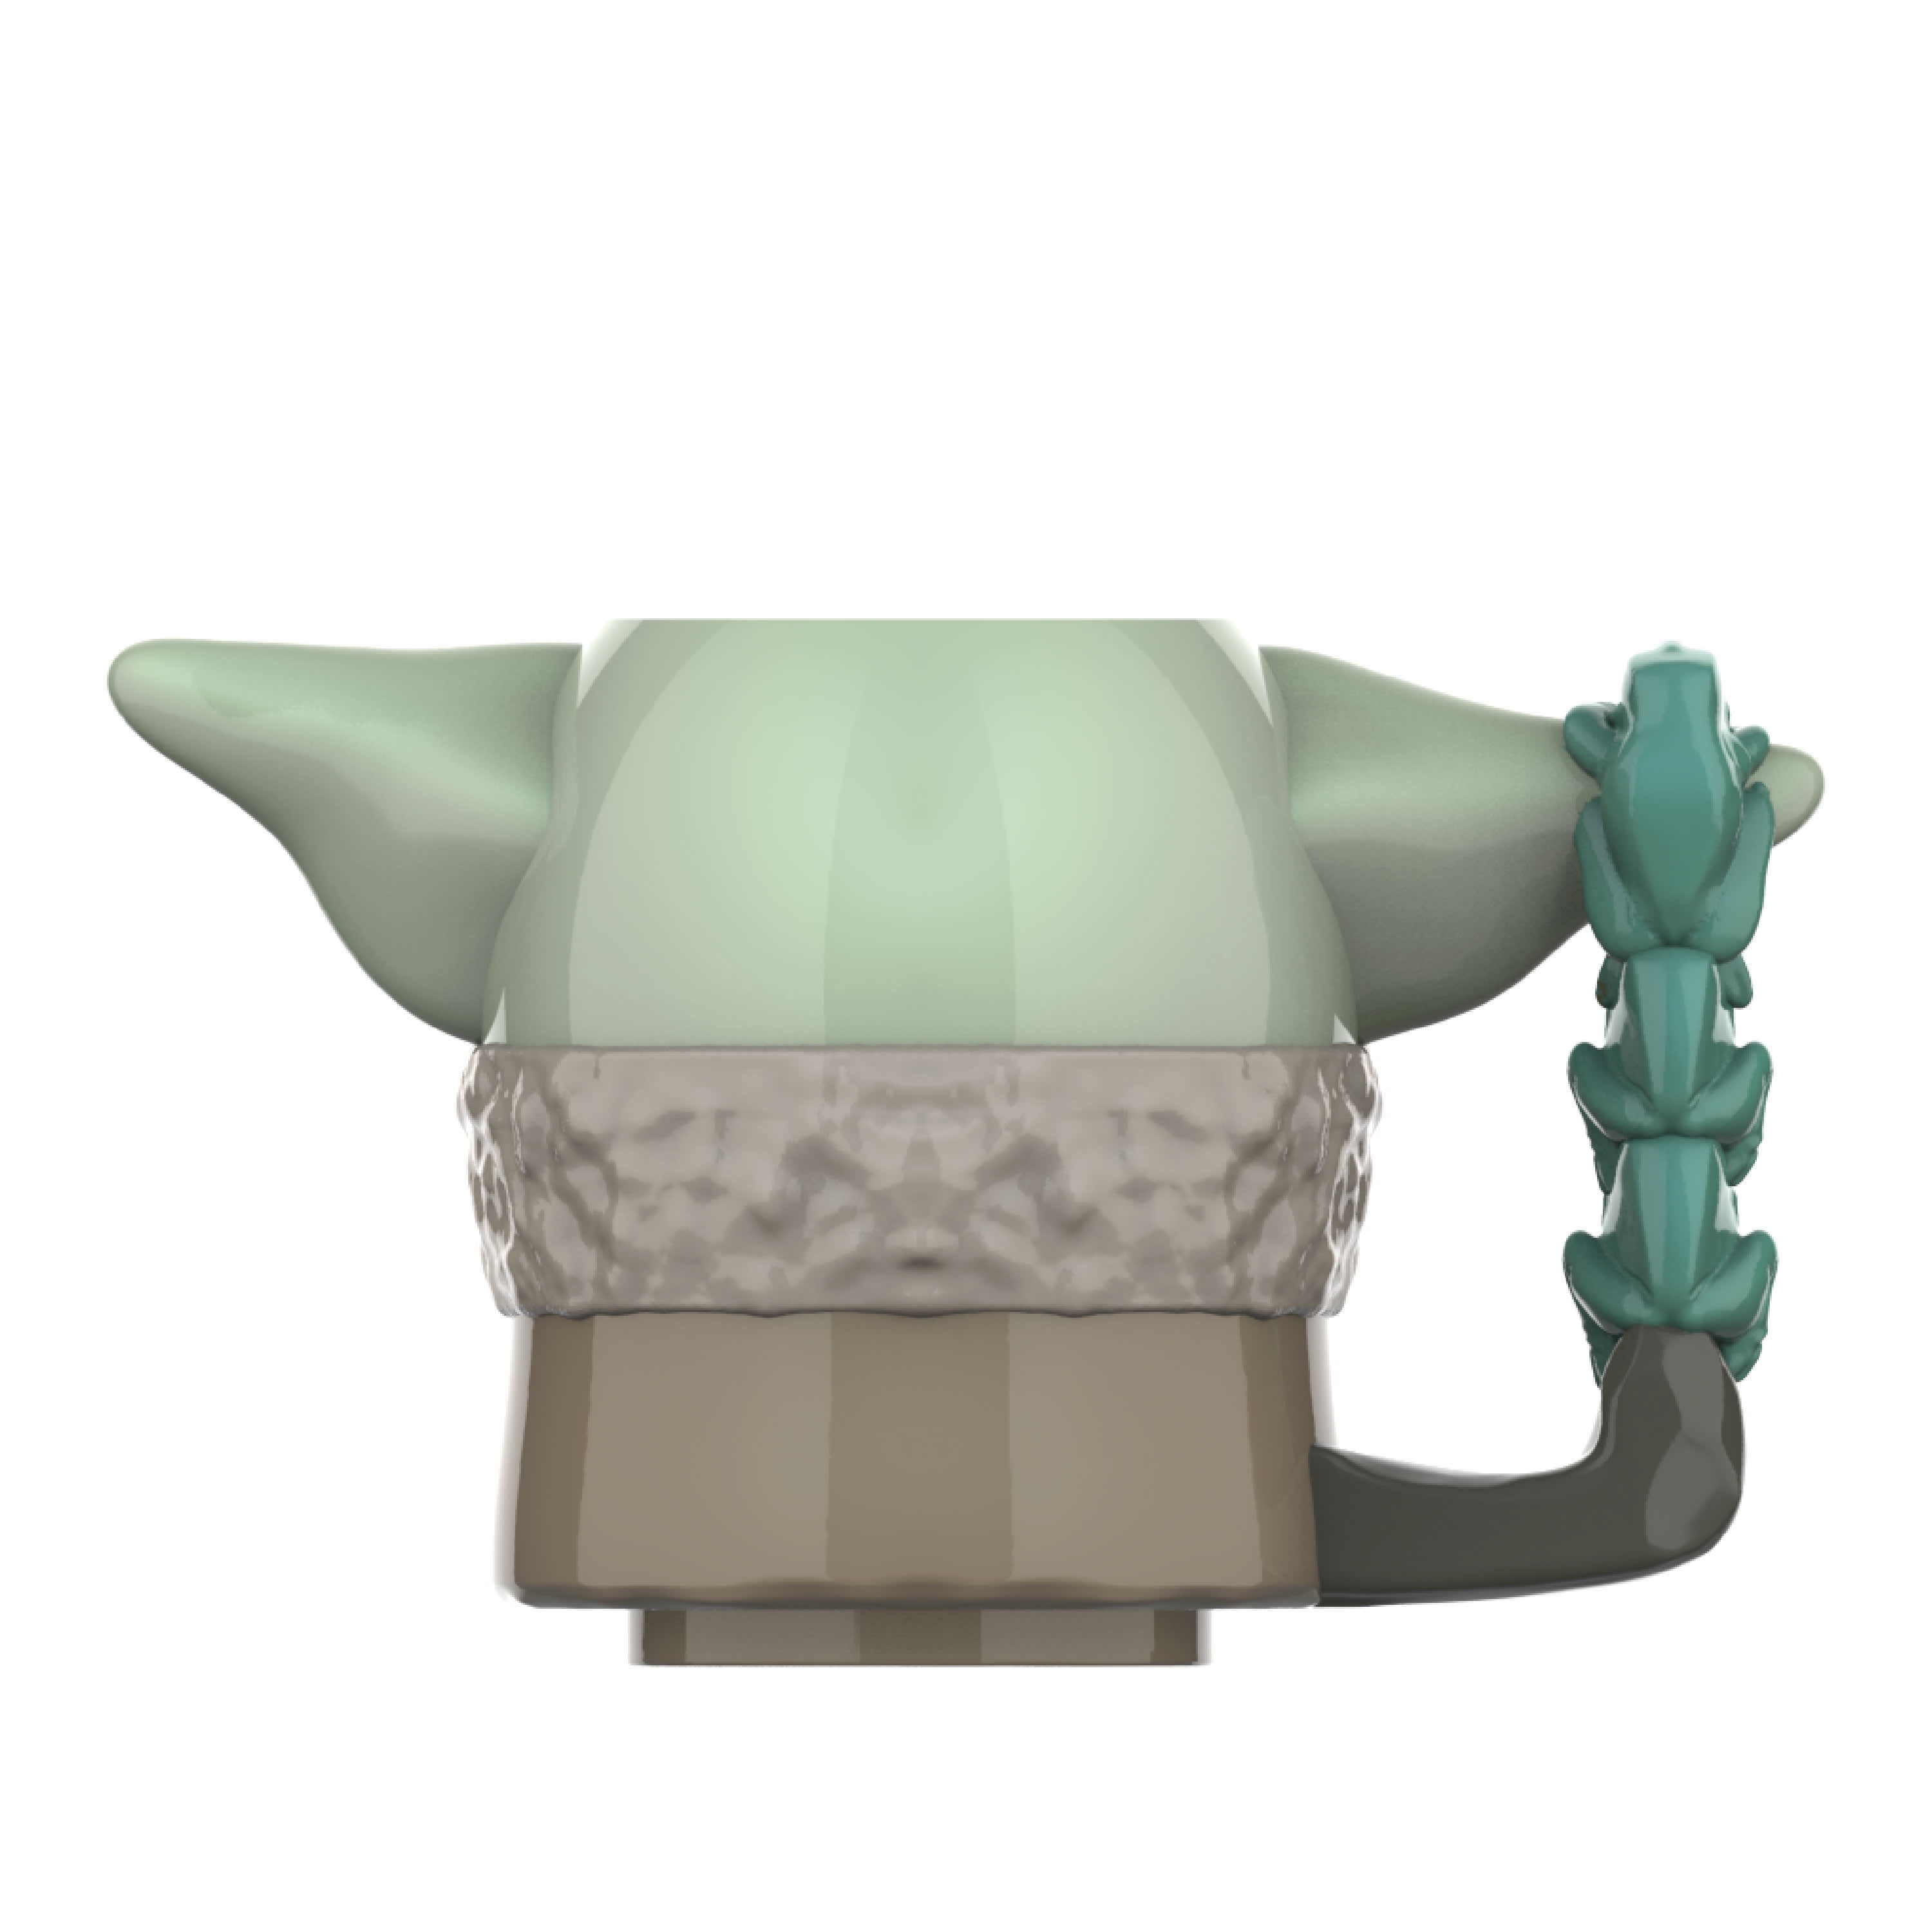 Zak Designs Star Wars: The Mandalorian 16 Ounce Ceramic Coffee Mug, The Child (Baby Yoda), Size: 16 fl oz, Yellow